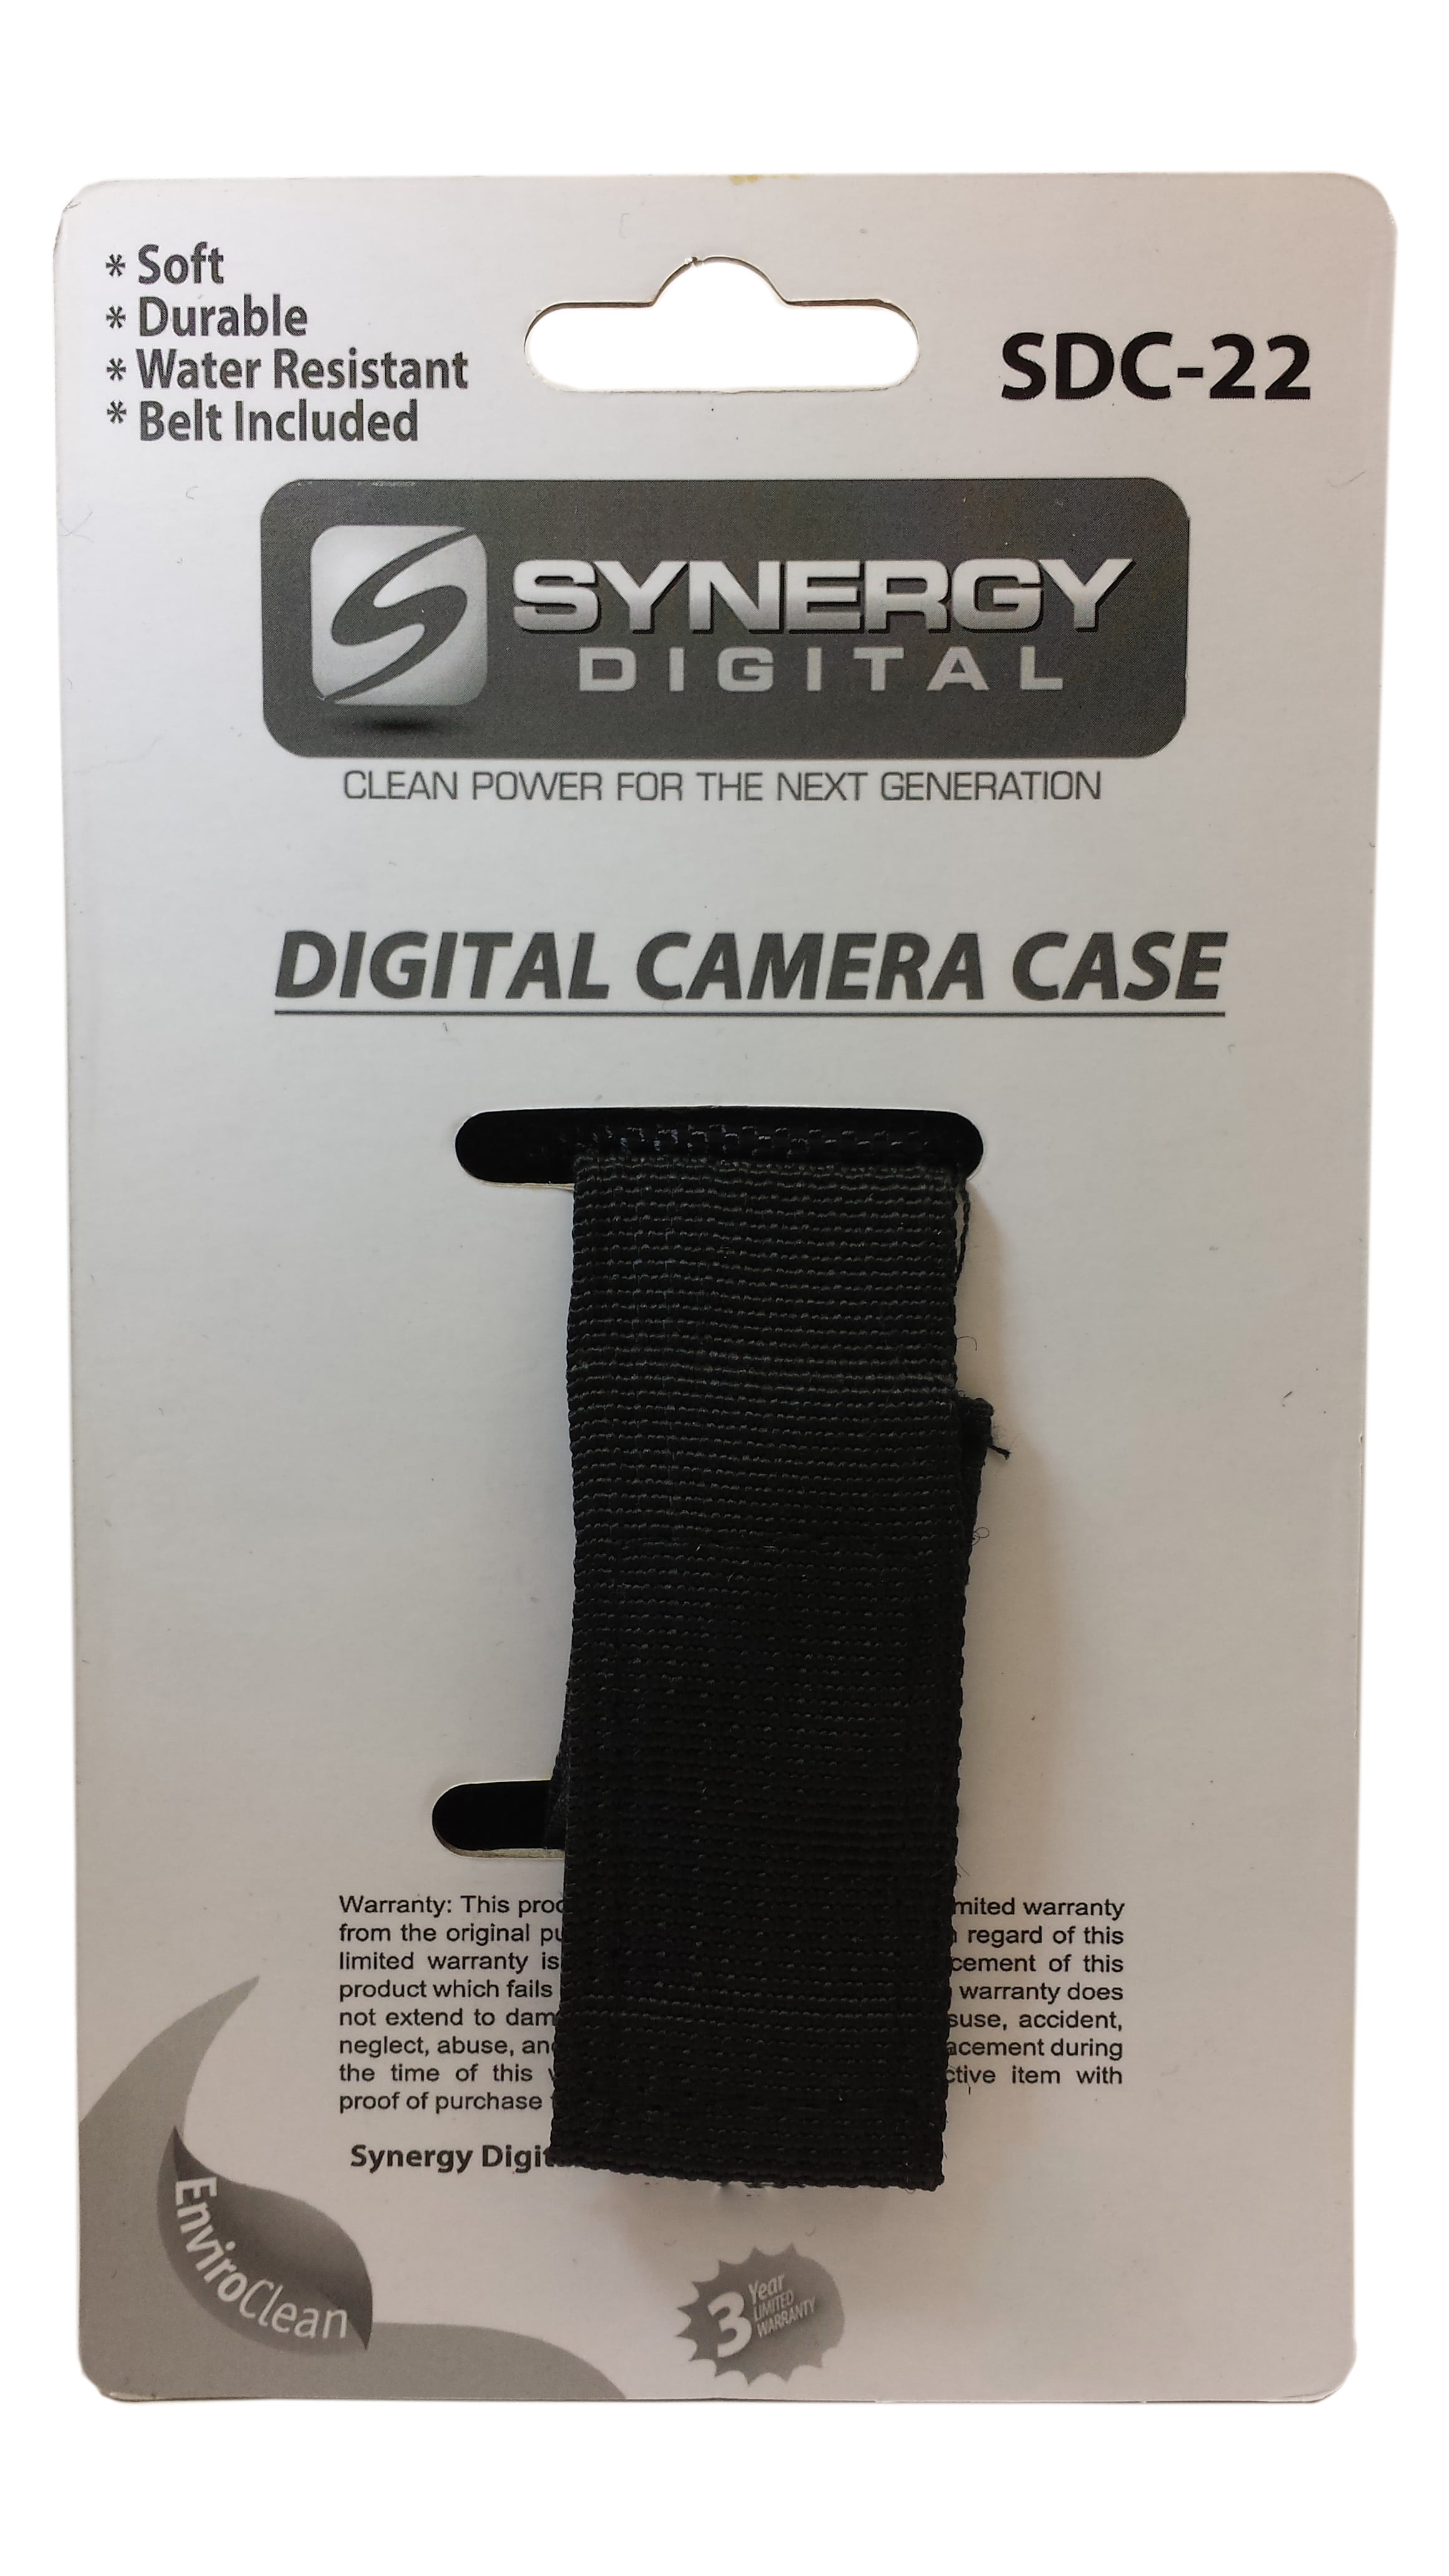 Jet black & Hot Orange TGC ® Camera Case for Panasonic Lumix DMC-G2 with shoulder strap and Carry Handle